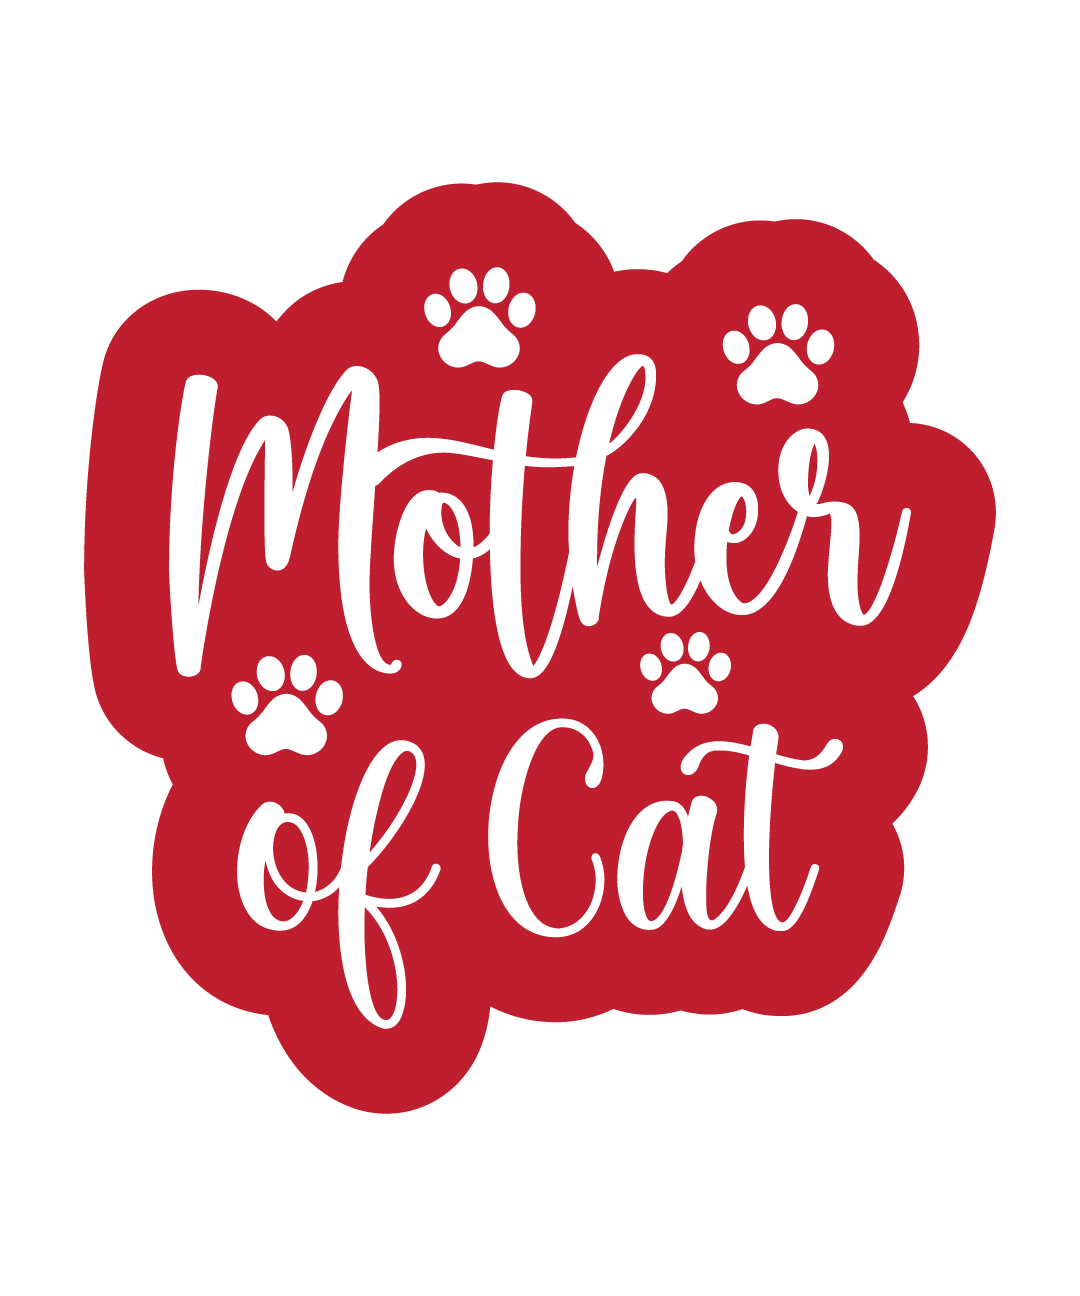 Inspirational Quote "Mother of Cat Sticker" Motivational Sticker Vinyl Decal Motivation Stickers- 5" Vinyl Sticker Waterproof